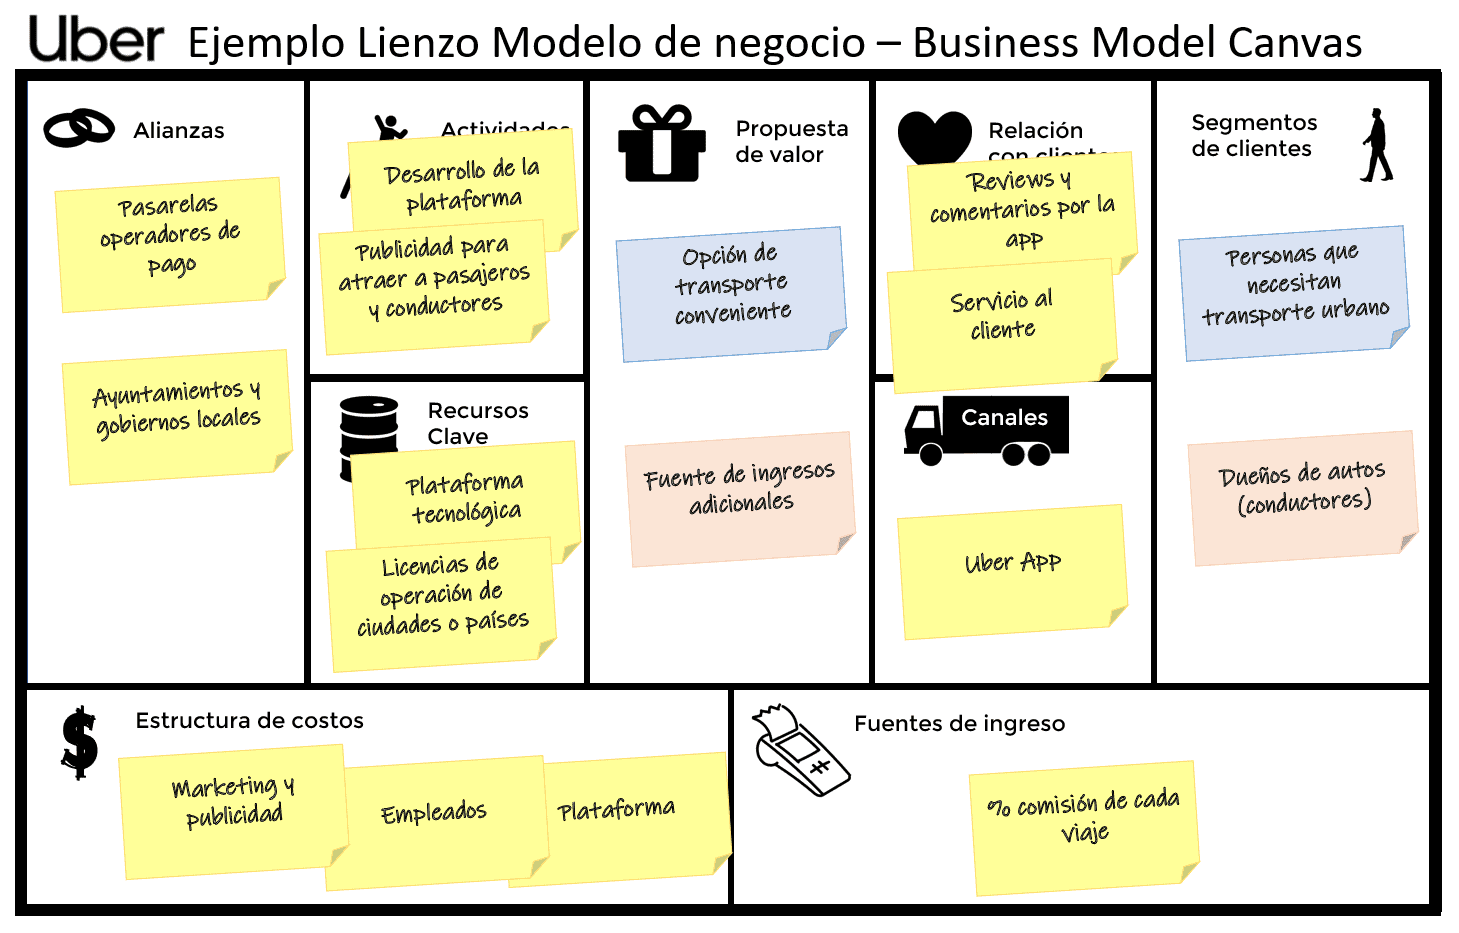 Business Model Canvas Ejemplo Uber - kulturaupice